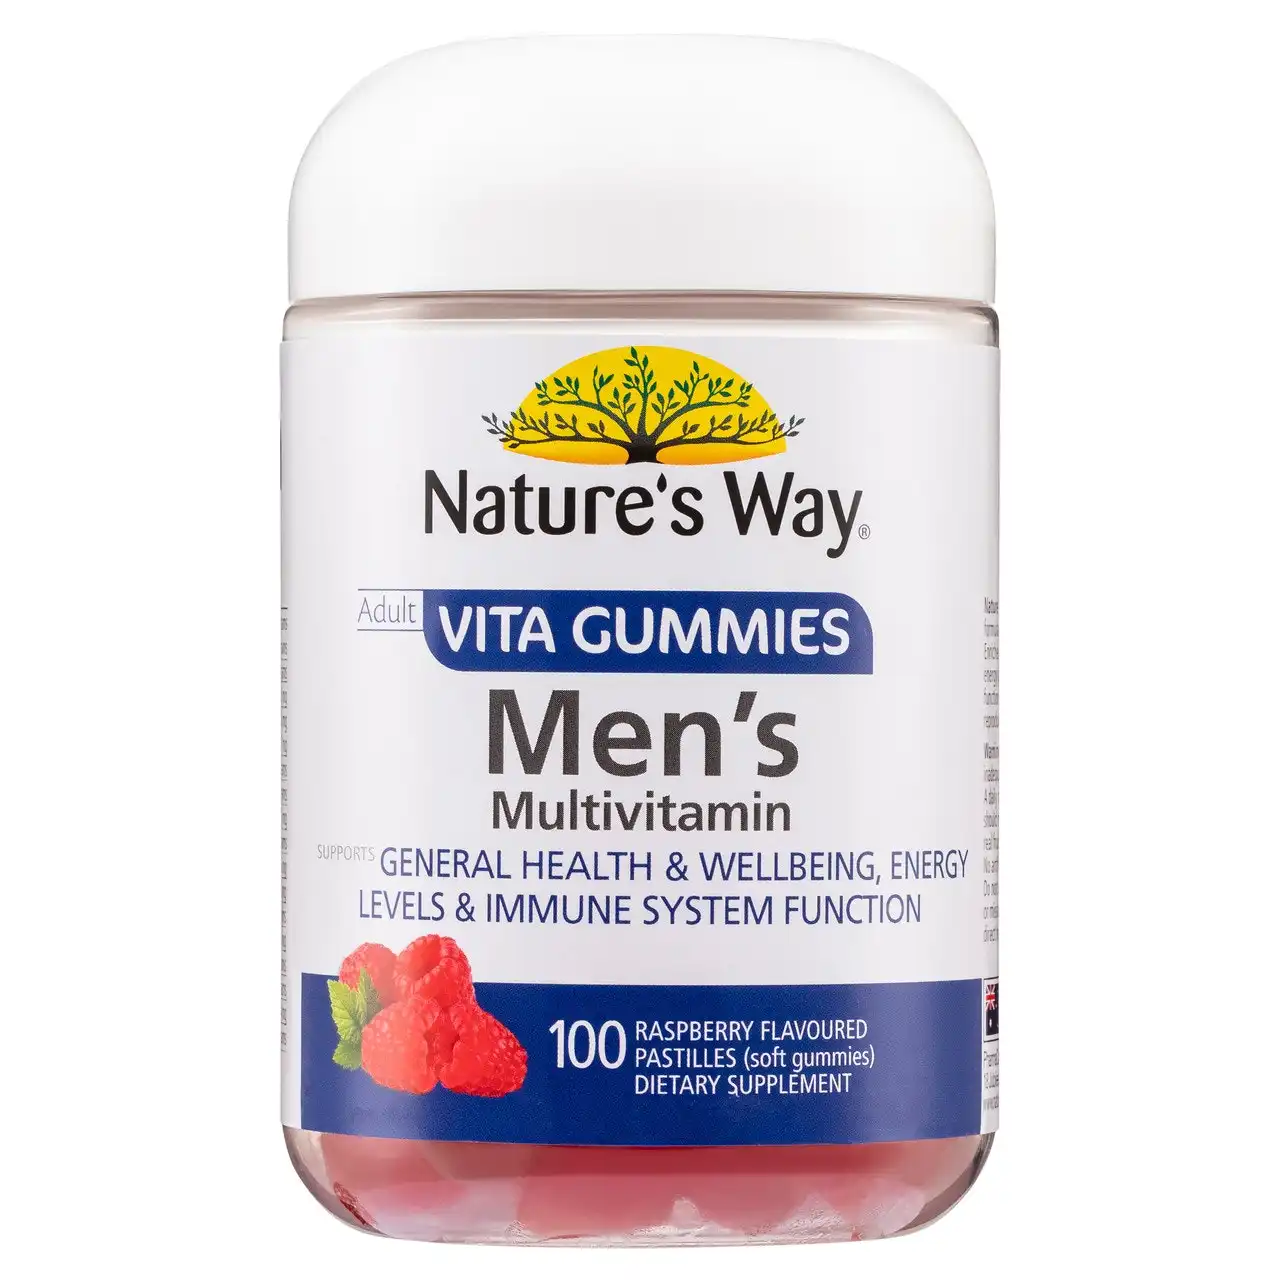 Nature's Way Adult Vita Gummies Men's Multivitamin 100's